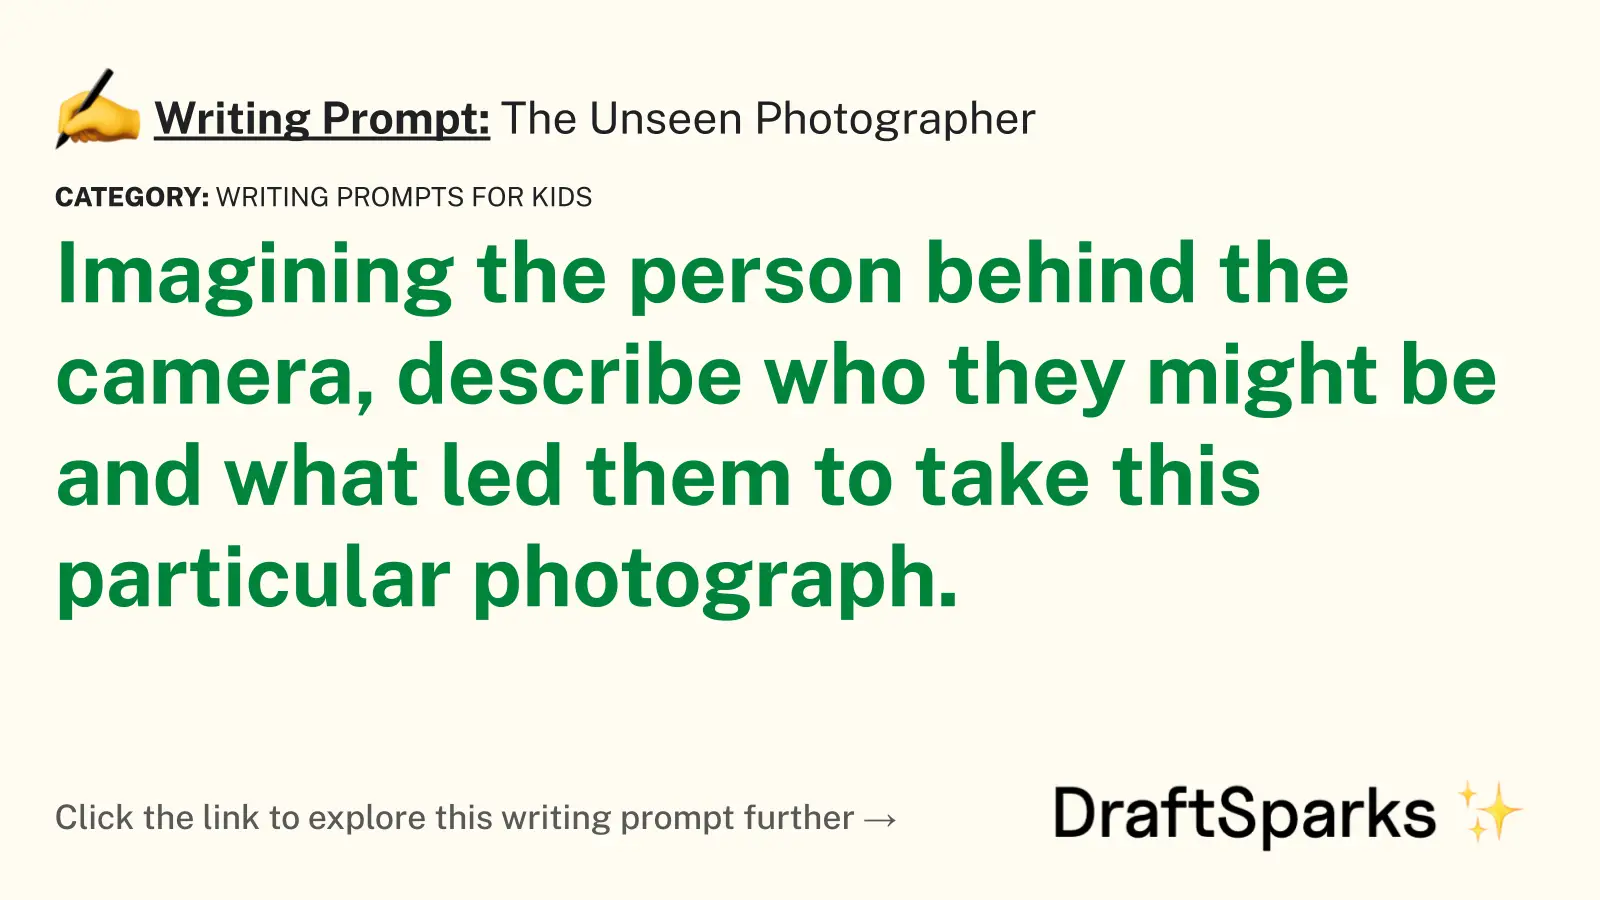 The Unseen Photographer